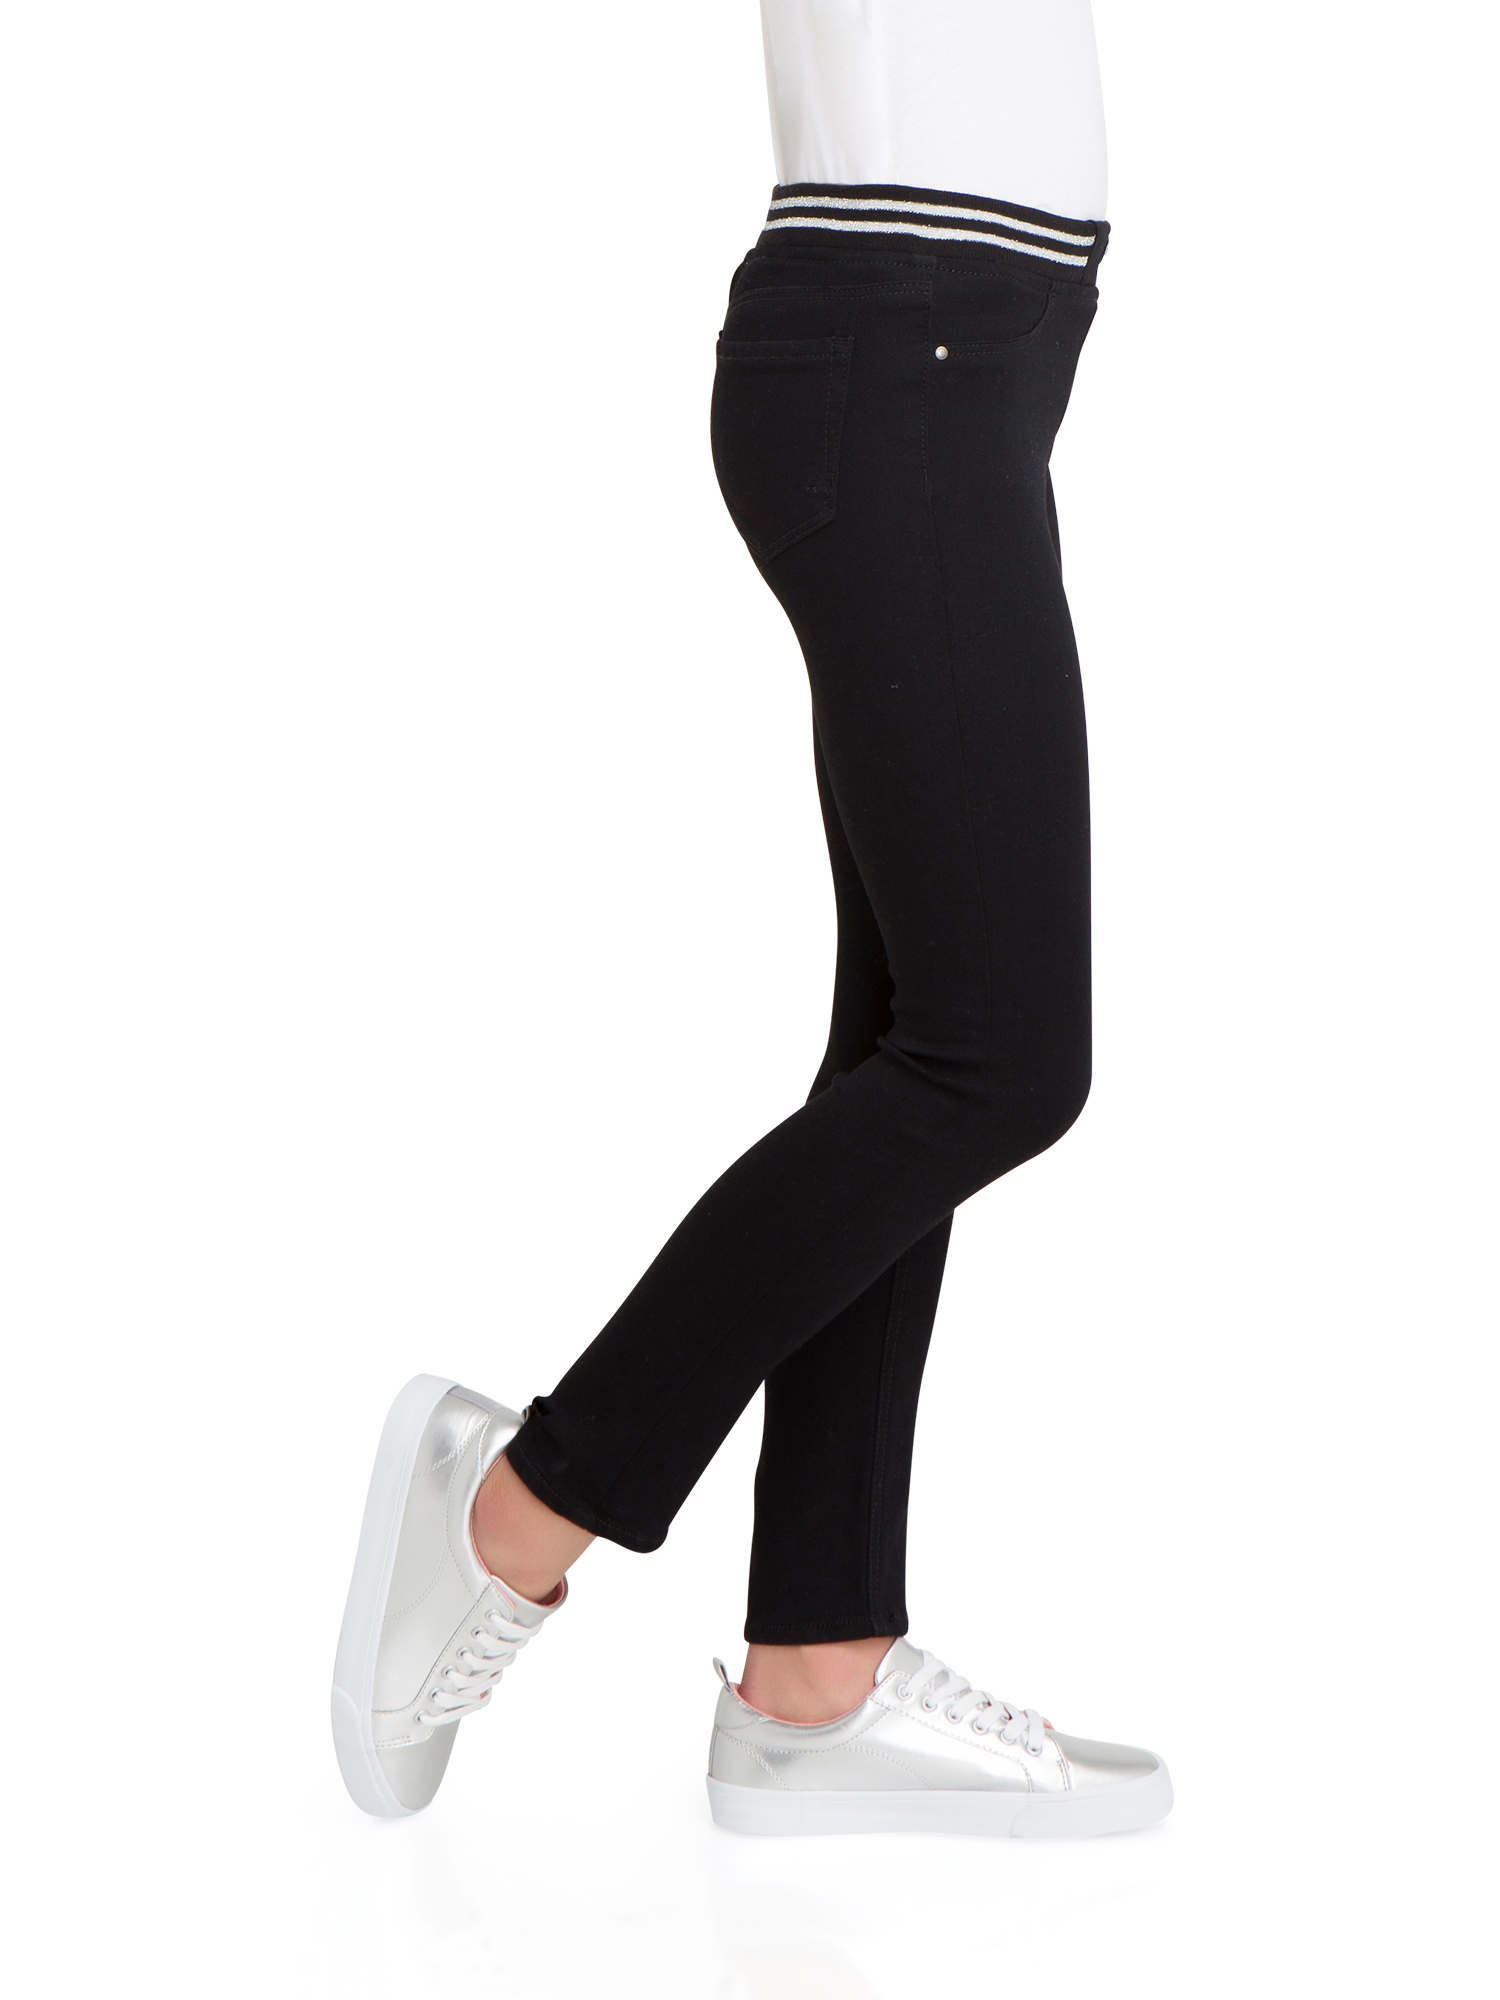 Jordache Girls Rib Waist Skinny Jeans, Slim Sizes 5-18 - image 3 of 4